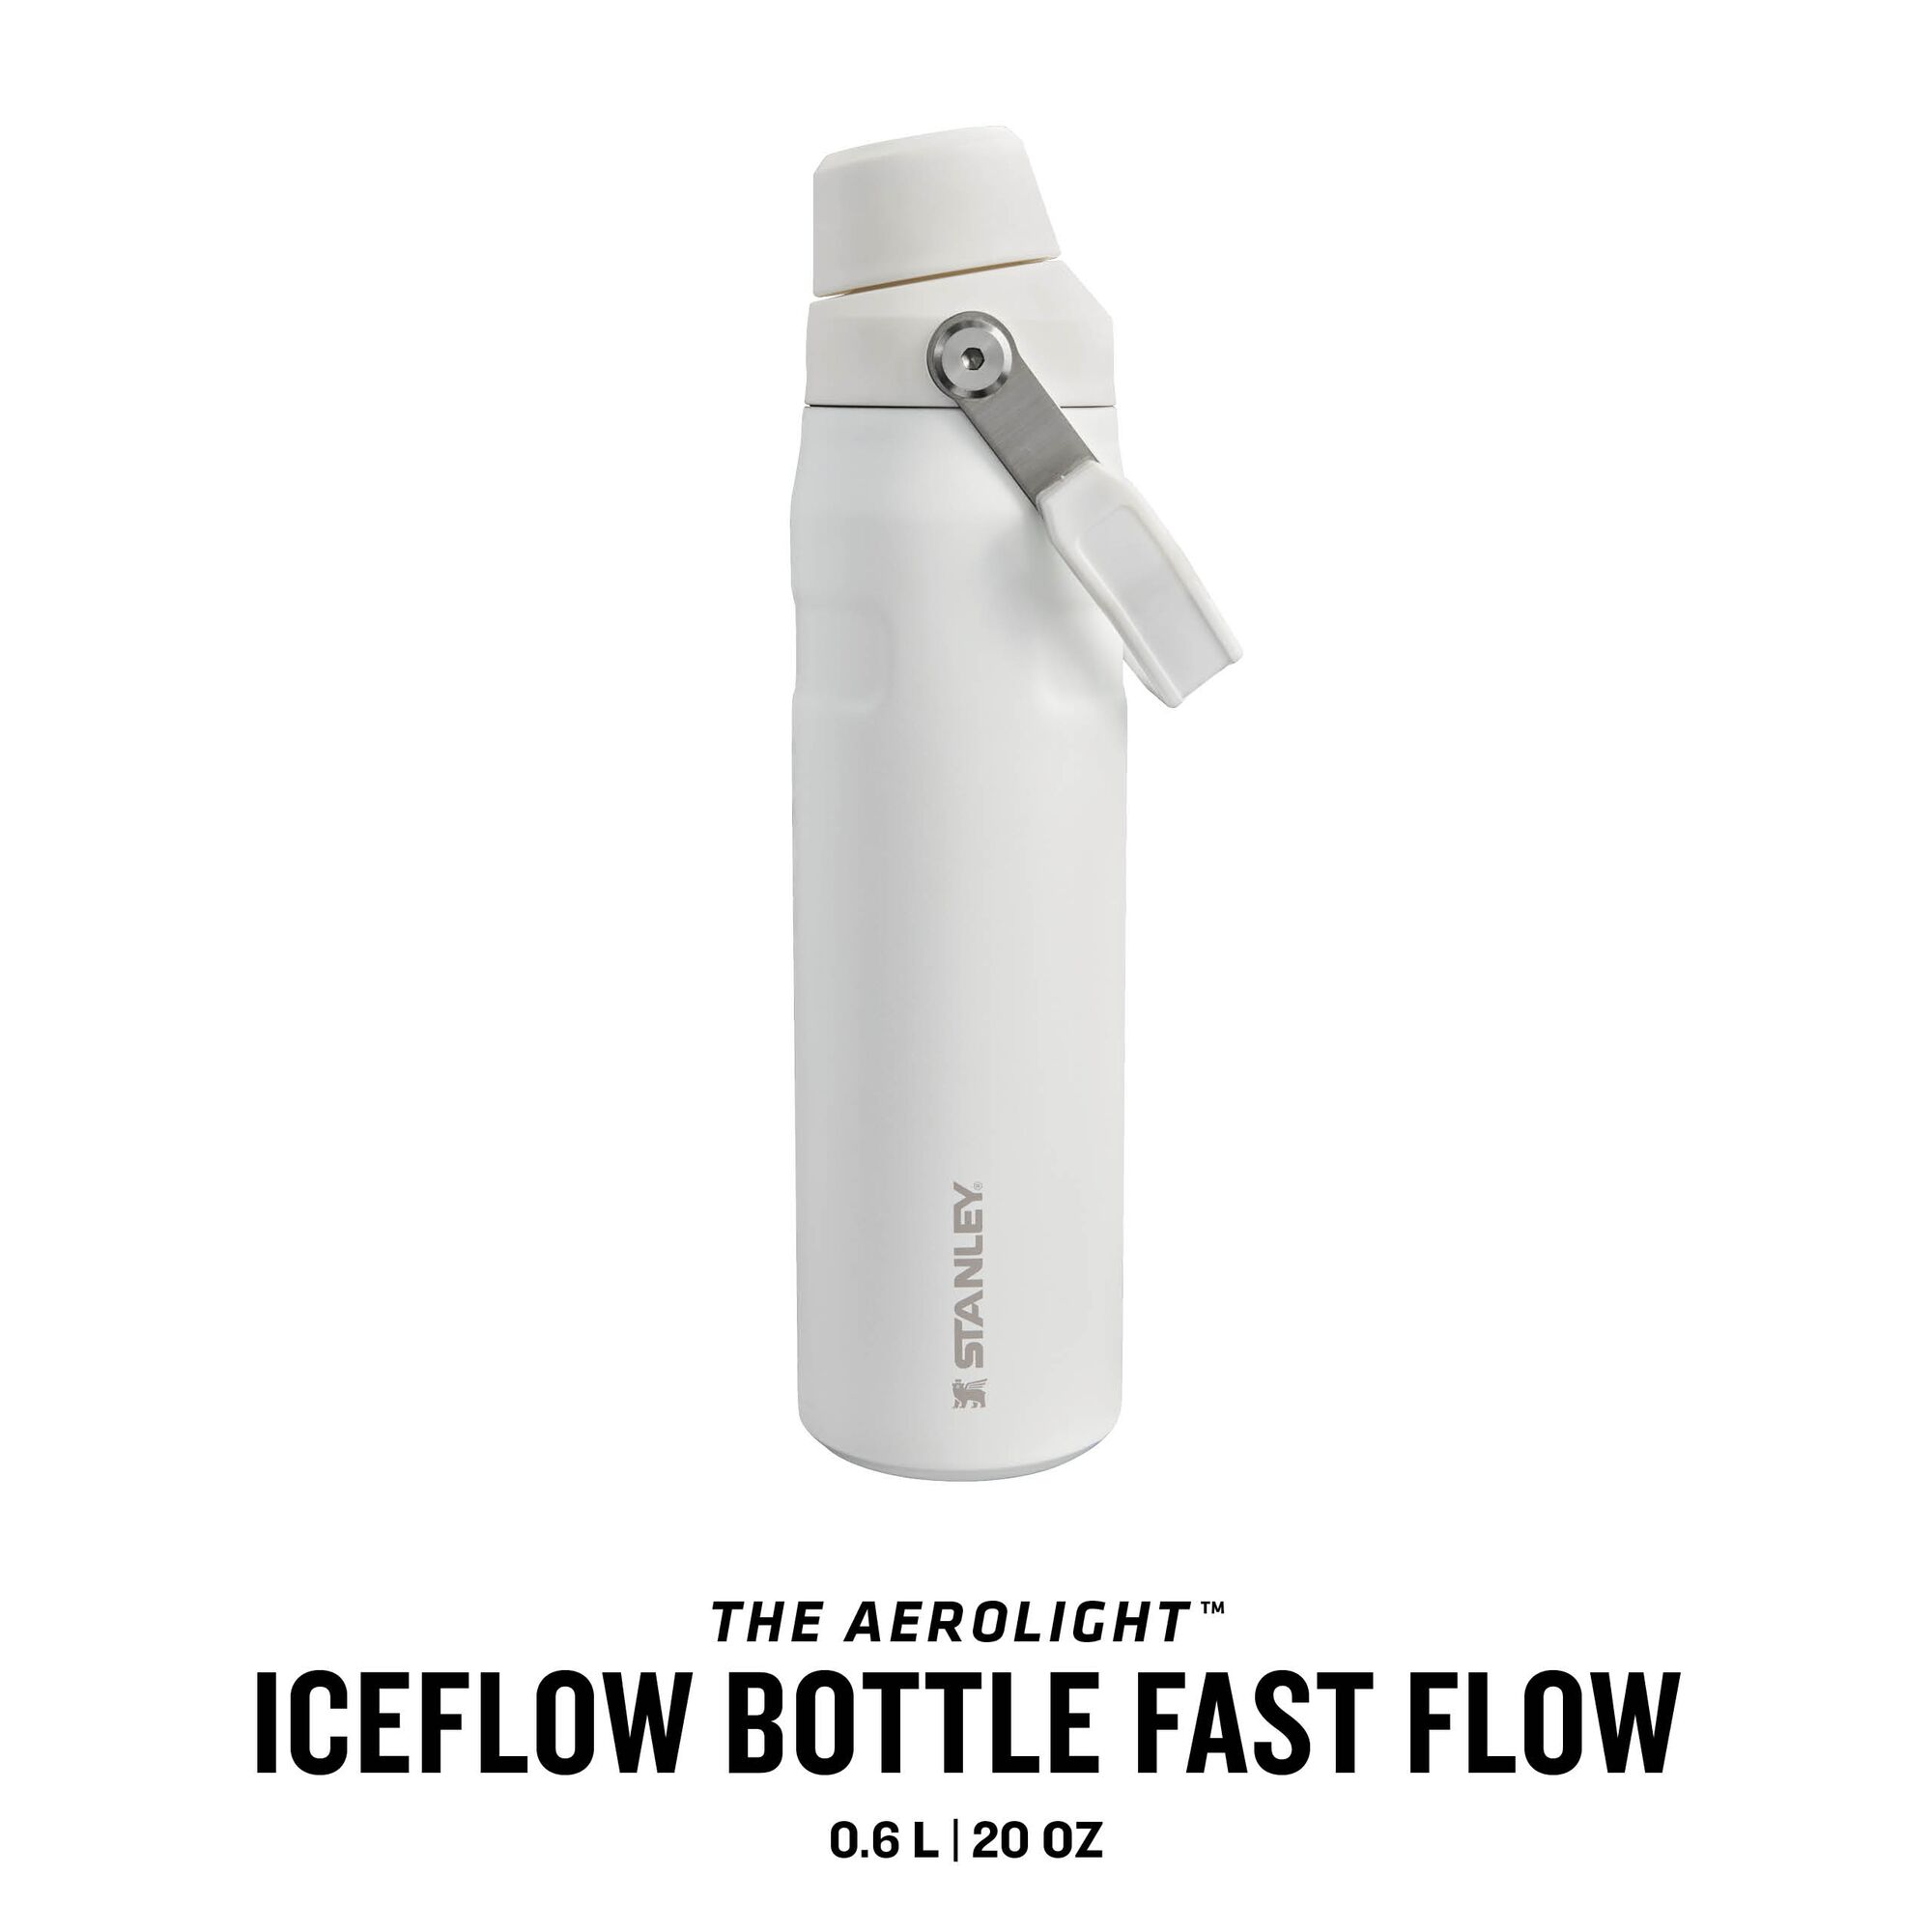 Stanley Isolierflasche The Aerolight Iceflow Bottle Fast Flow 0,6l Frost